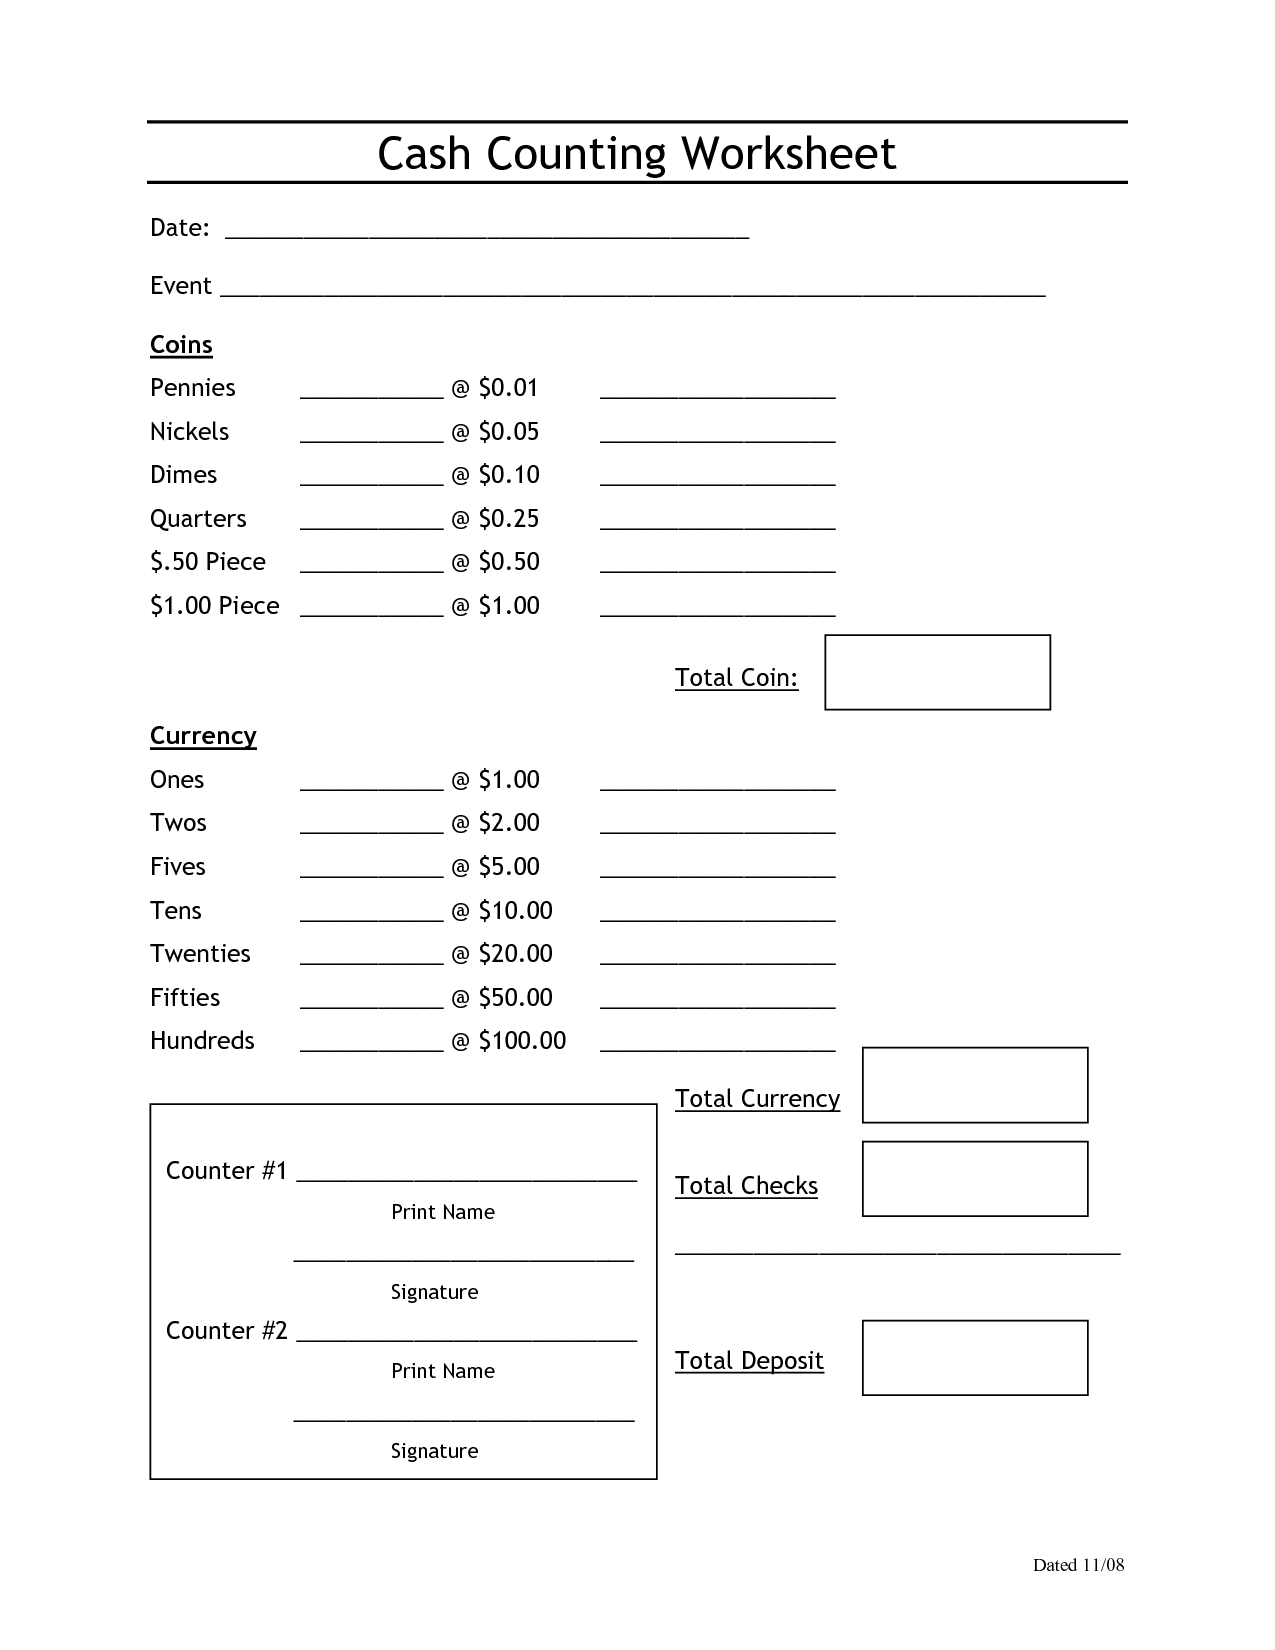 Excel Count Sheet Computer Invoice Cash Cash Drawer Balance Sheet 